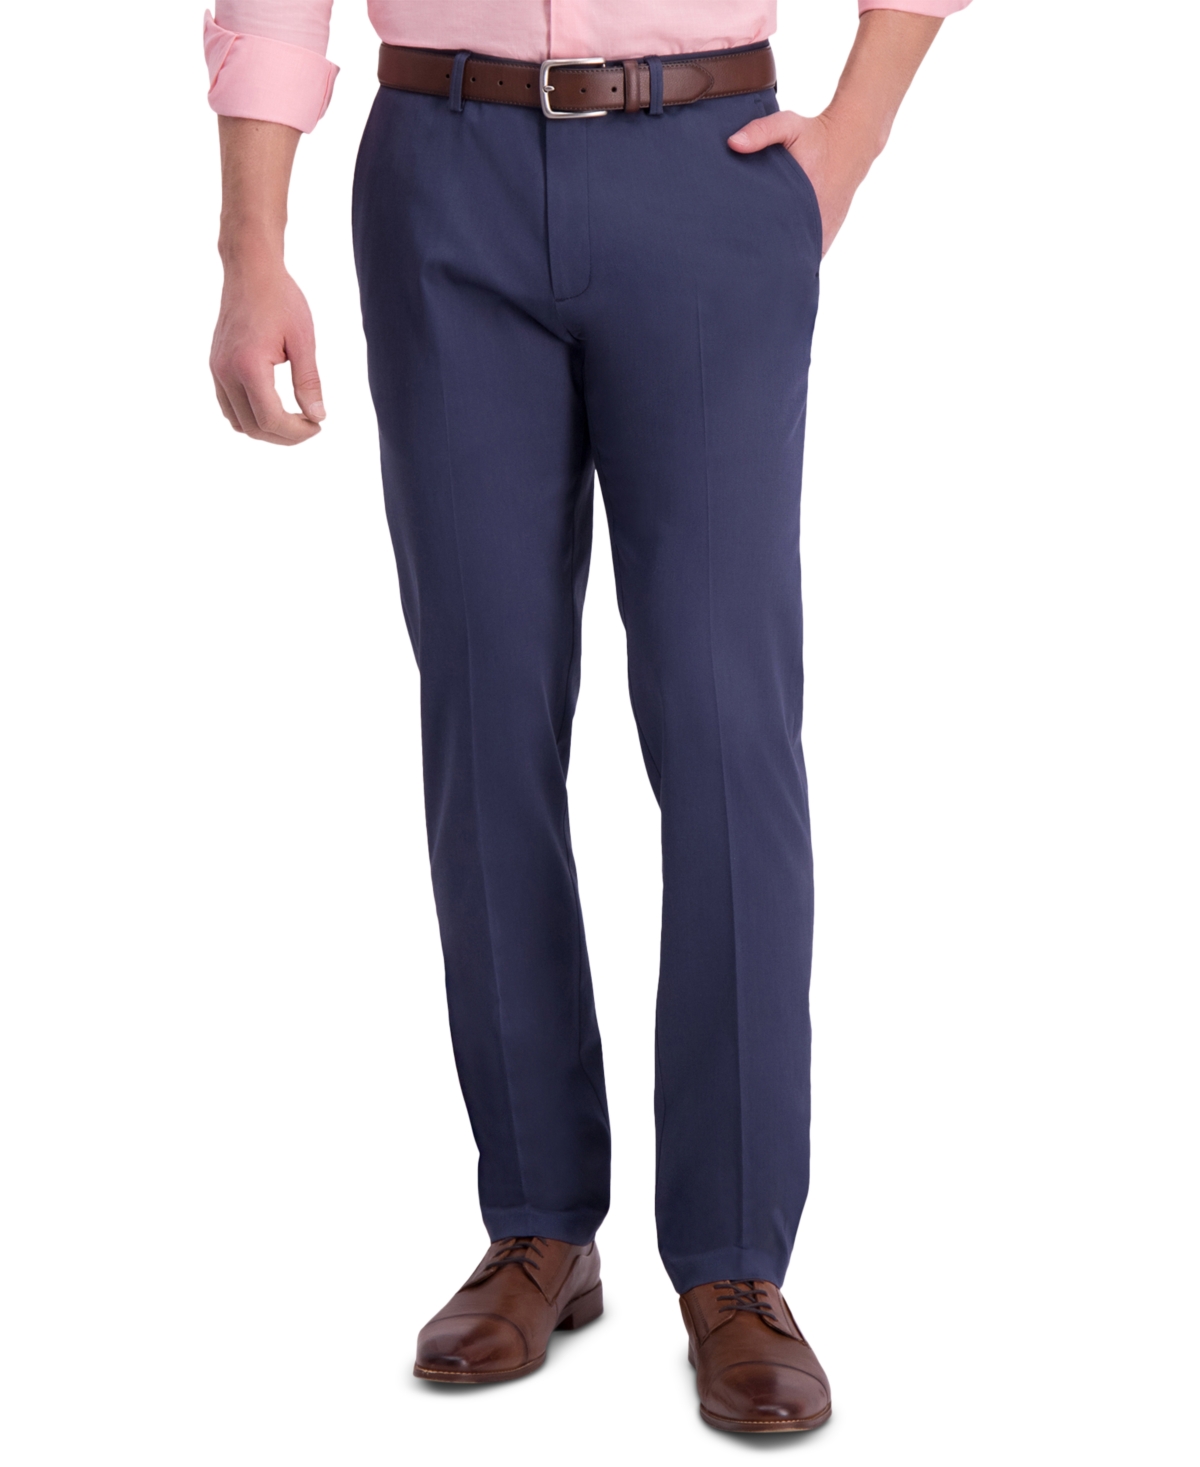 Men's Iron Free Premium Khaki Slim-Fit Flat-Front Pant - Heather Grey